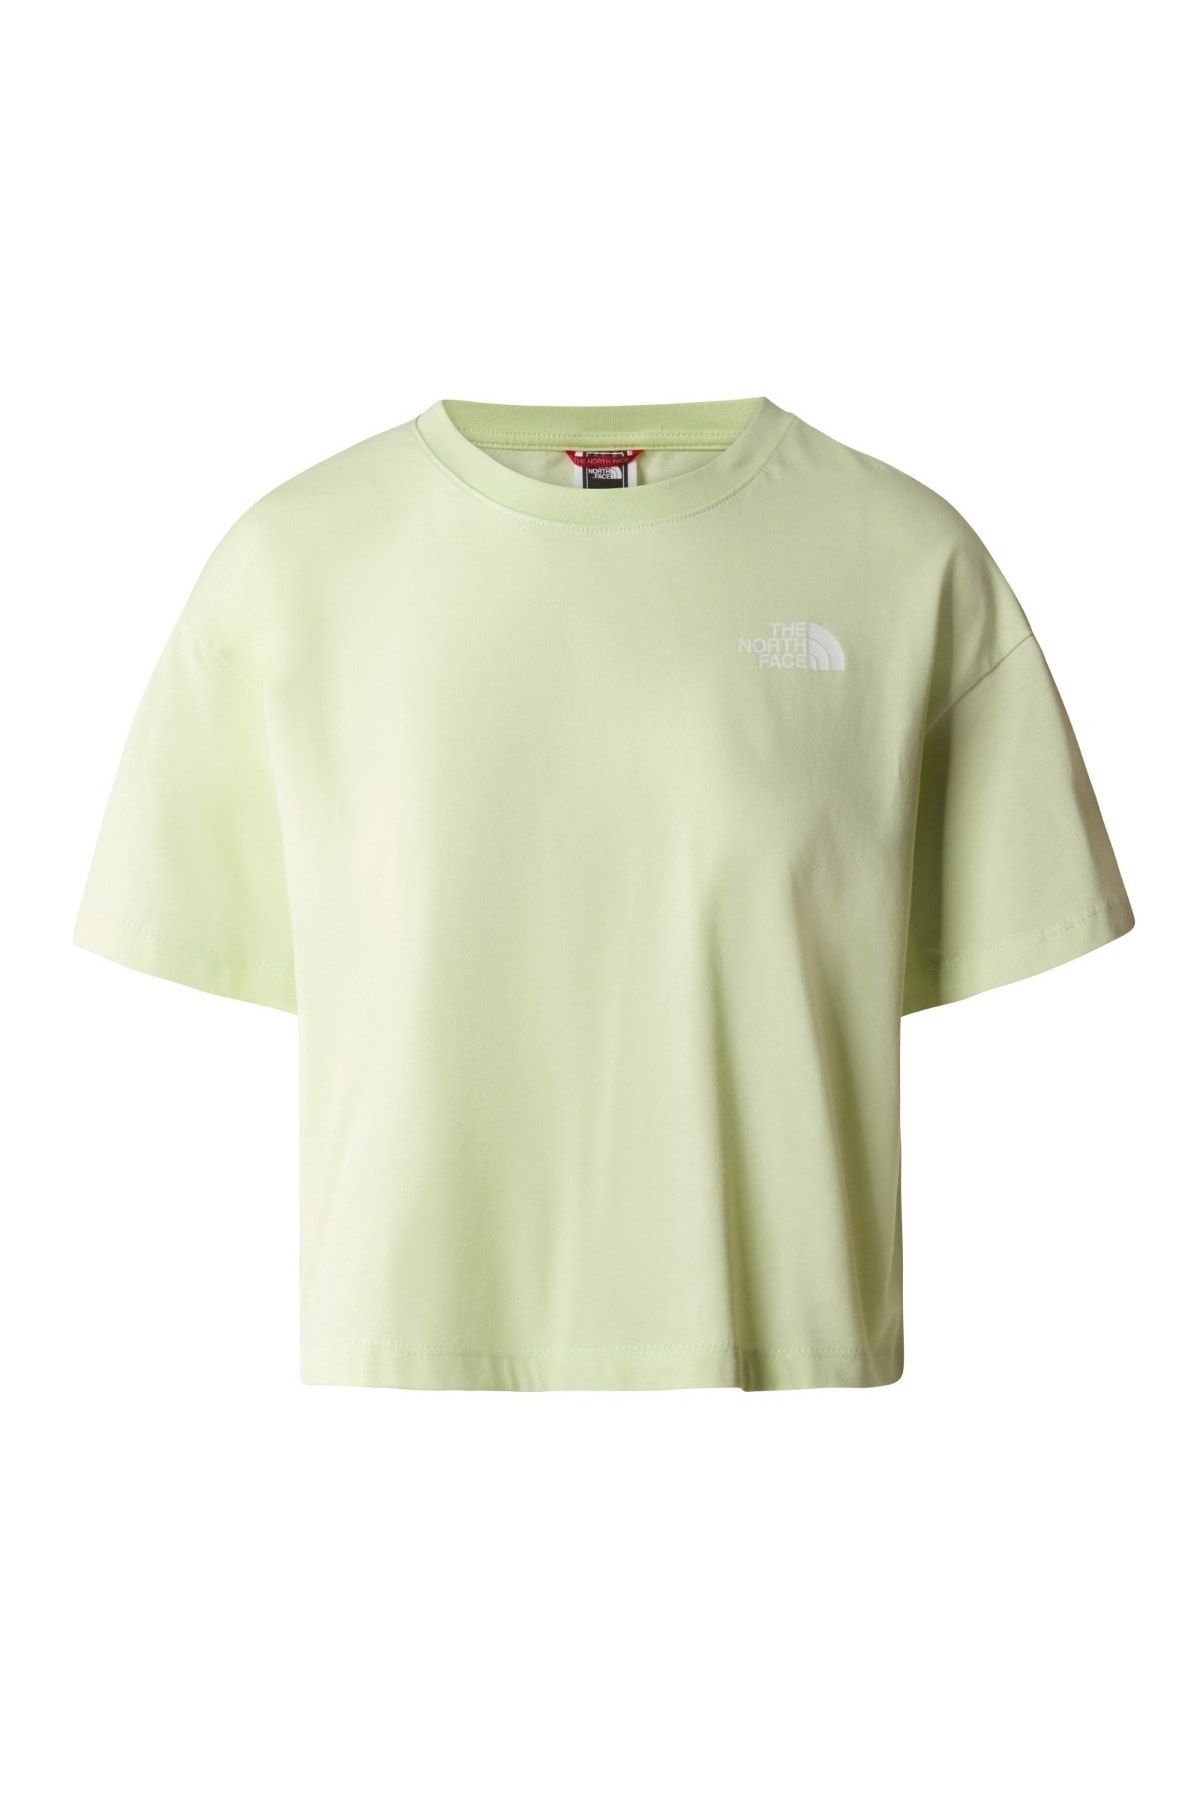 The North Face Simple Dome Kadın Yeşil Crop Tişört